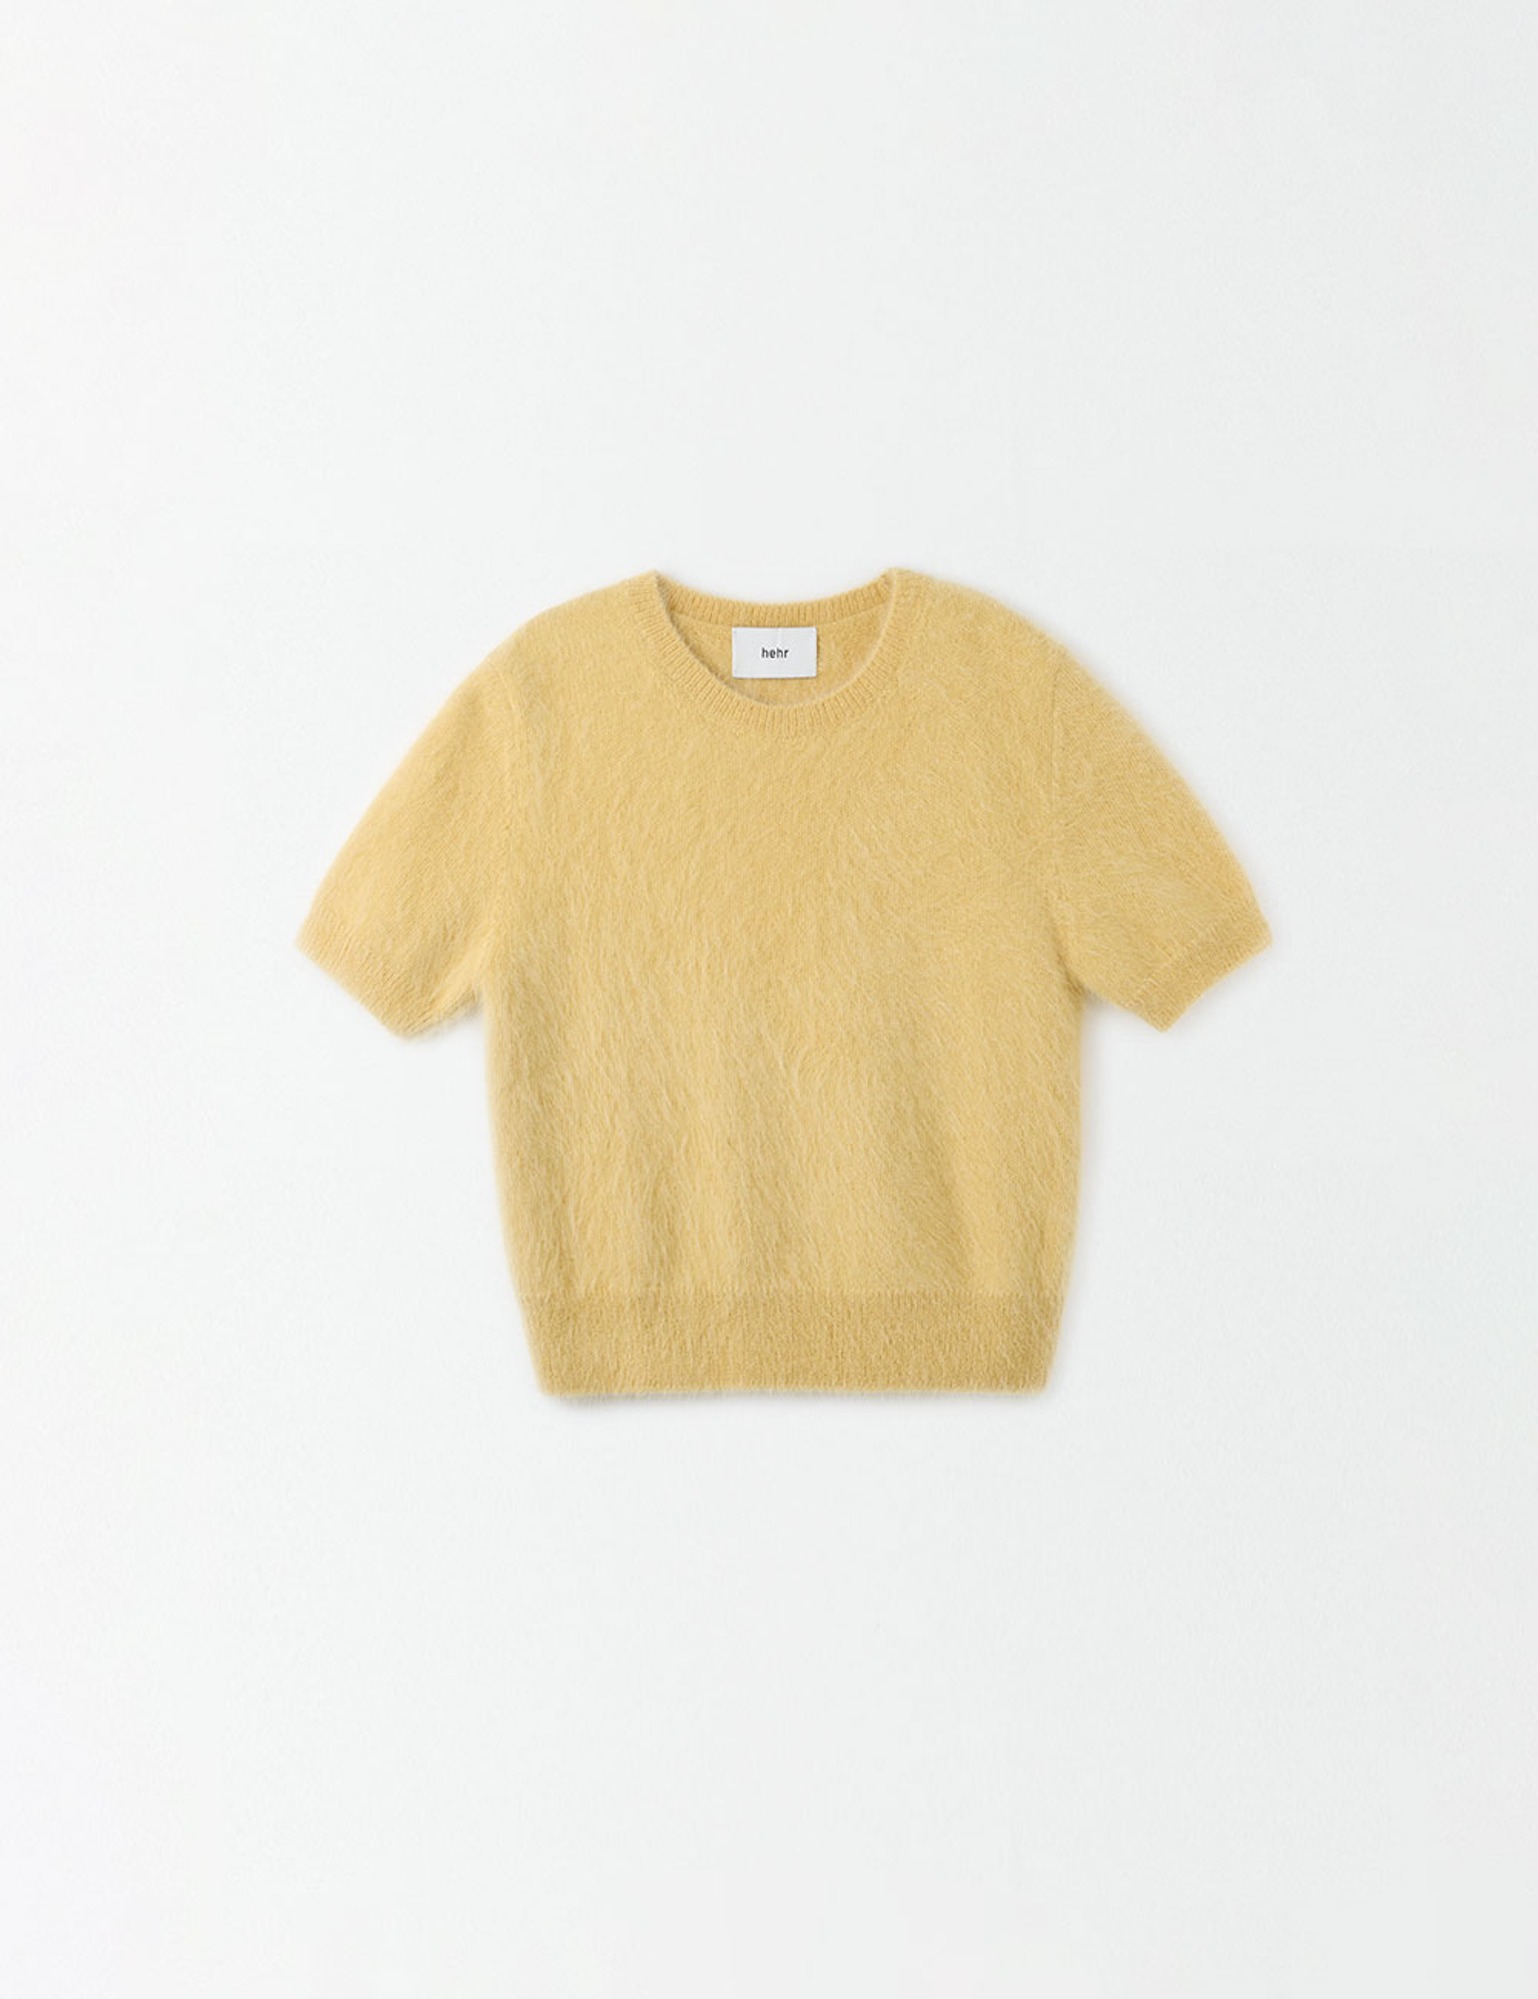 Aria knit (Yellow)